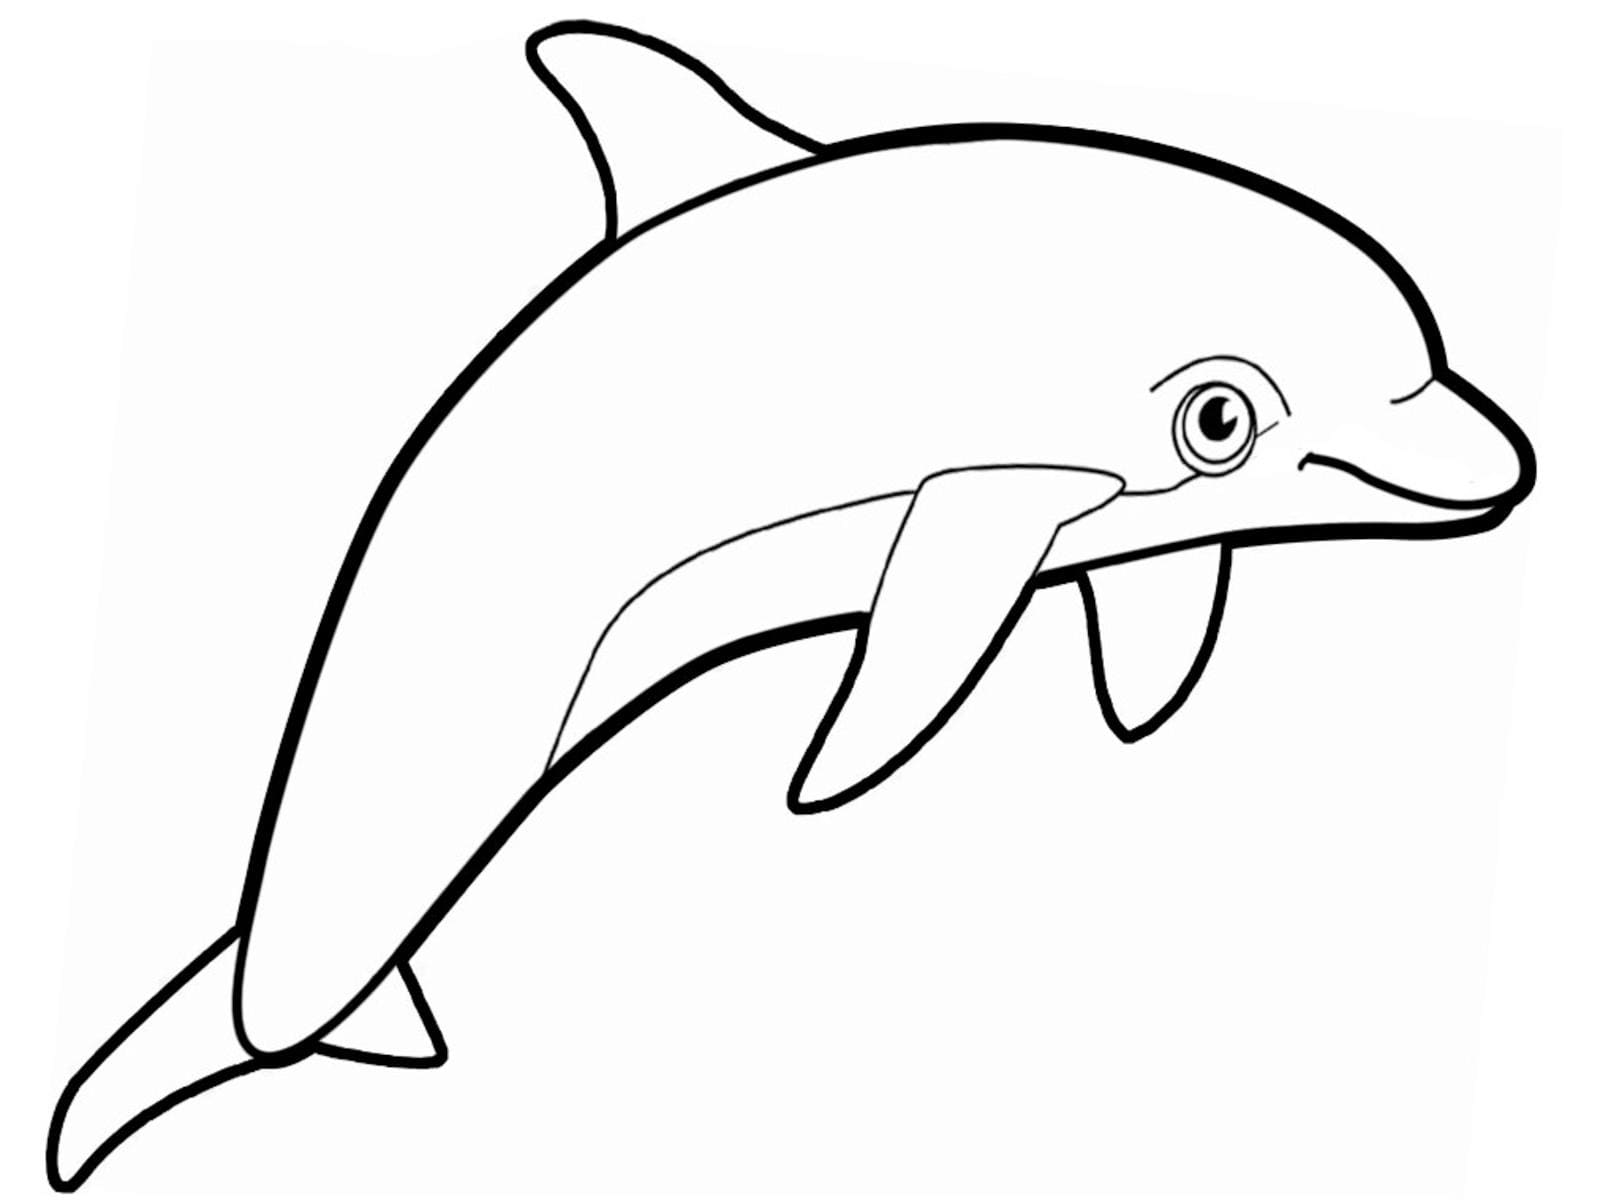 Alle Mandala delfin aufgelistet